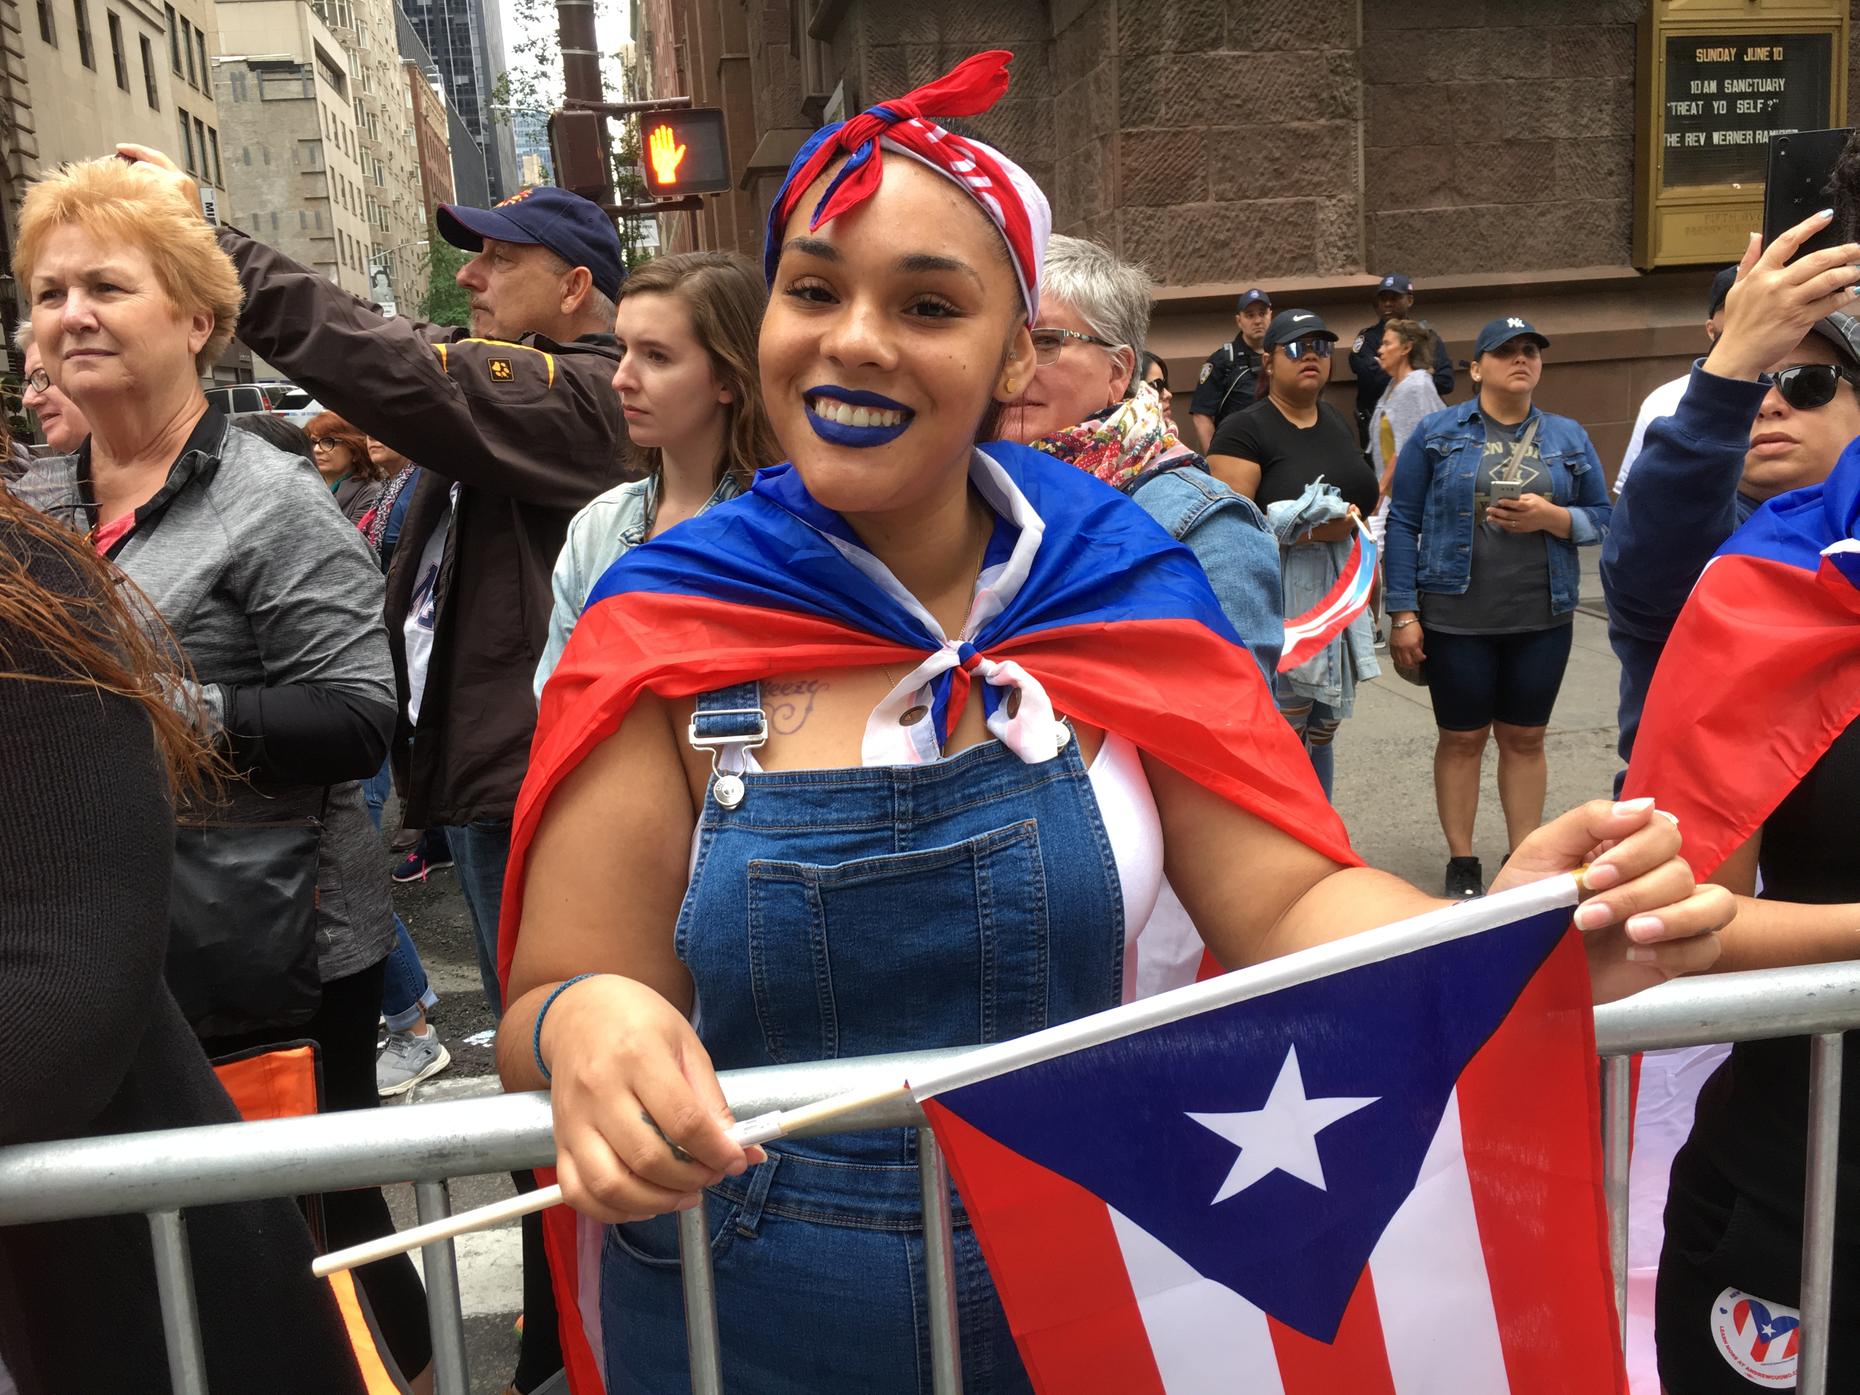 Puerto Rican Day Parade returns after COVID19 hiatus WNYC New York